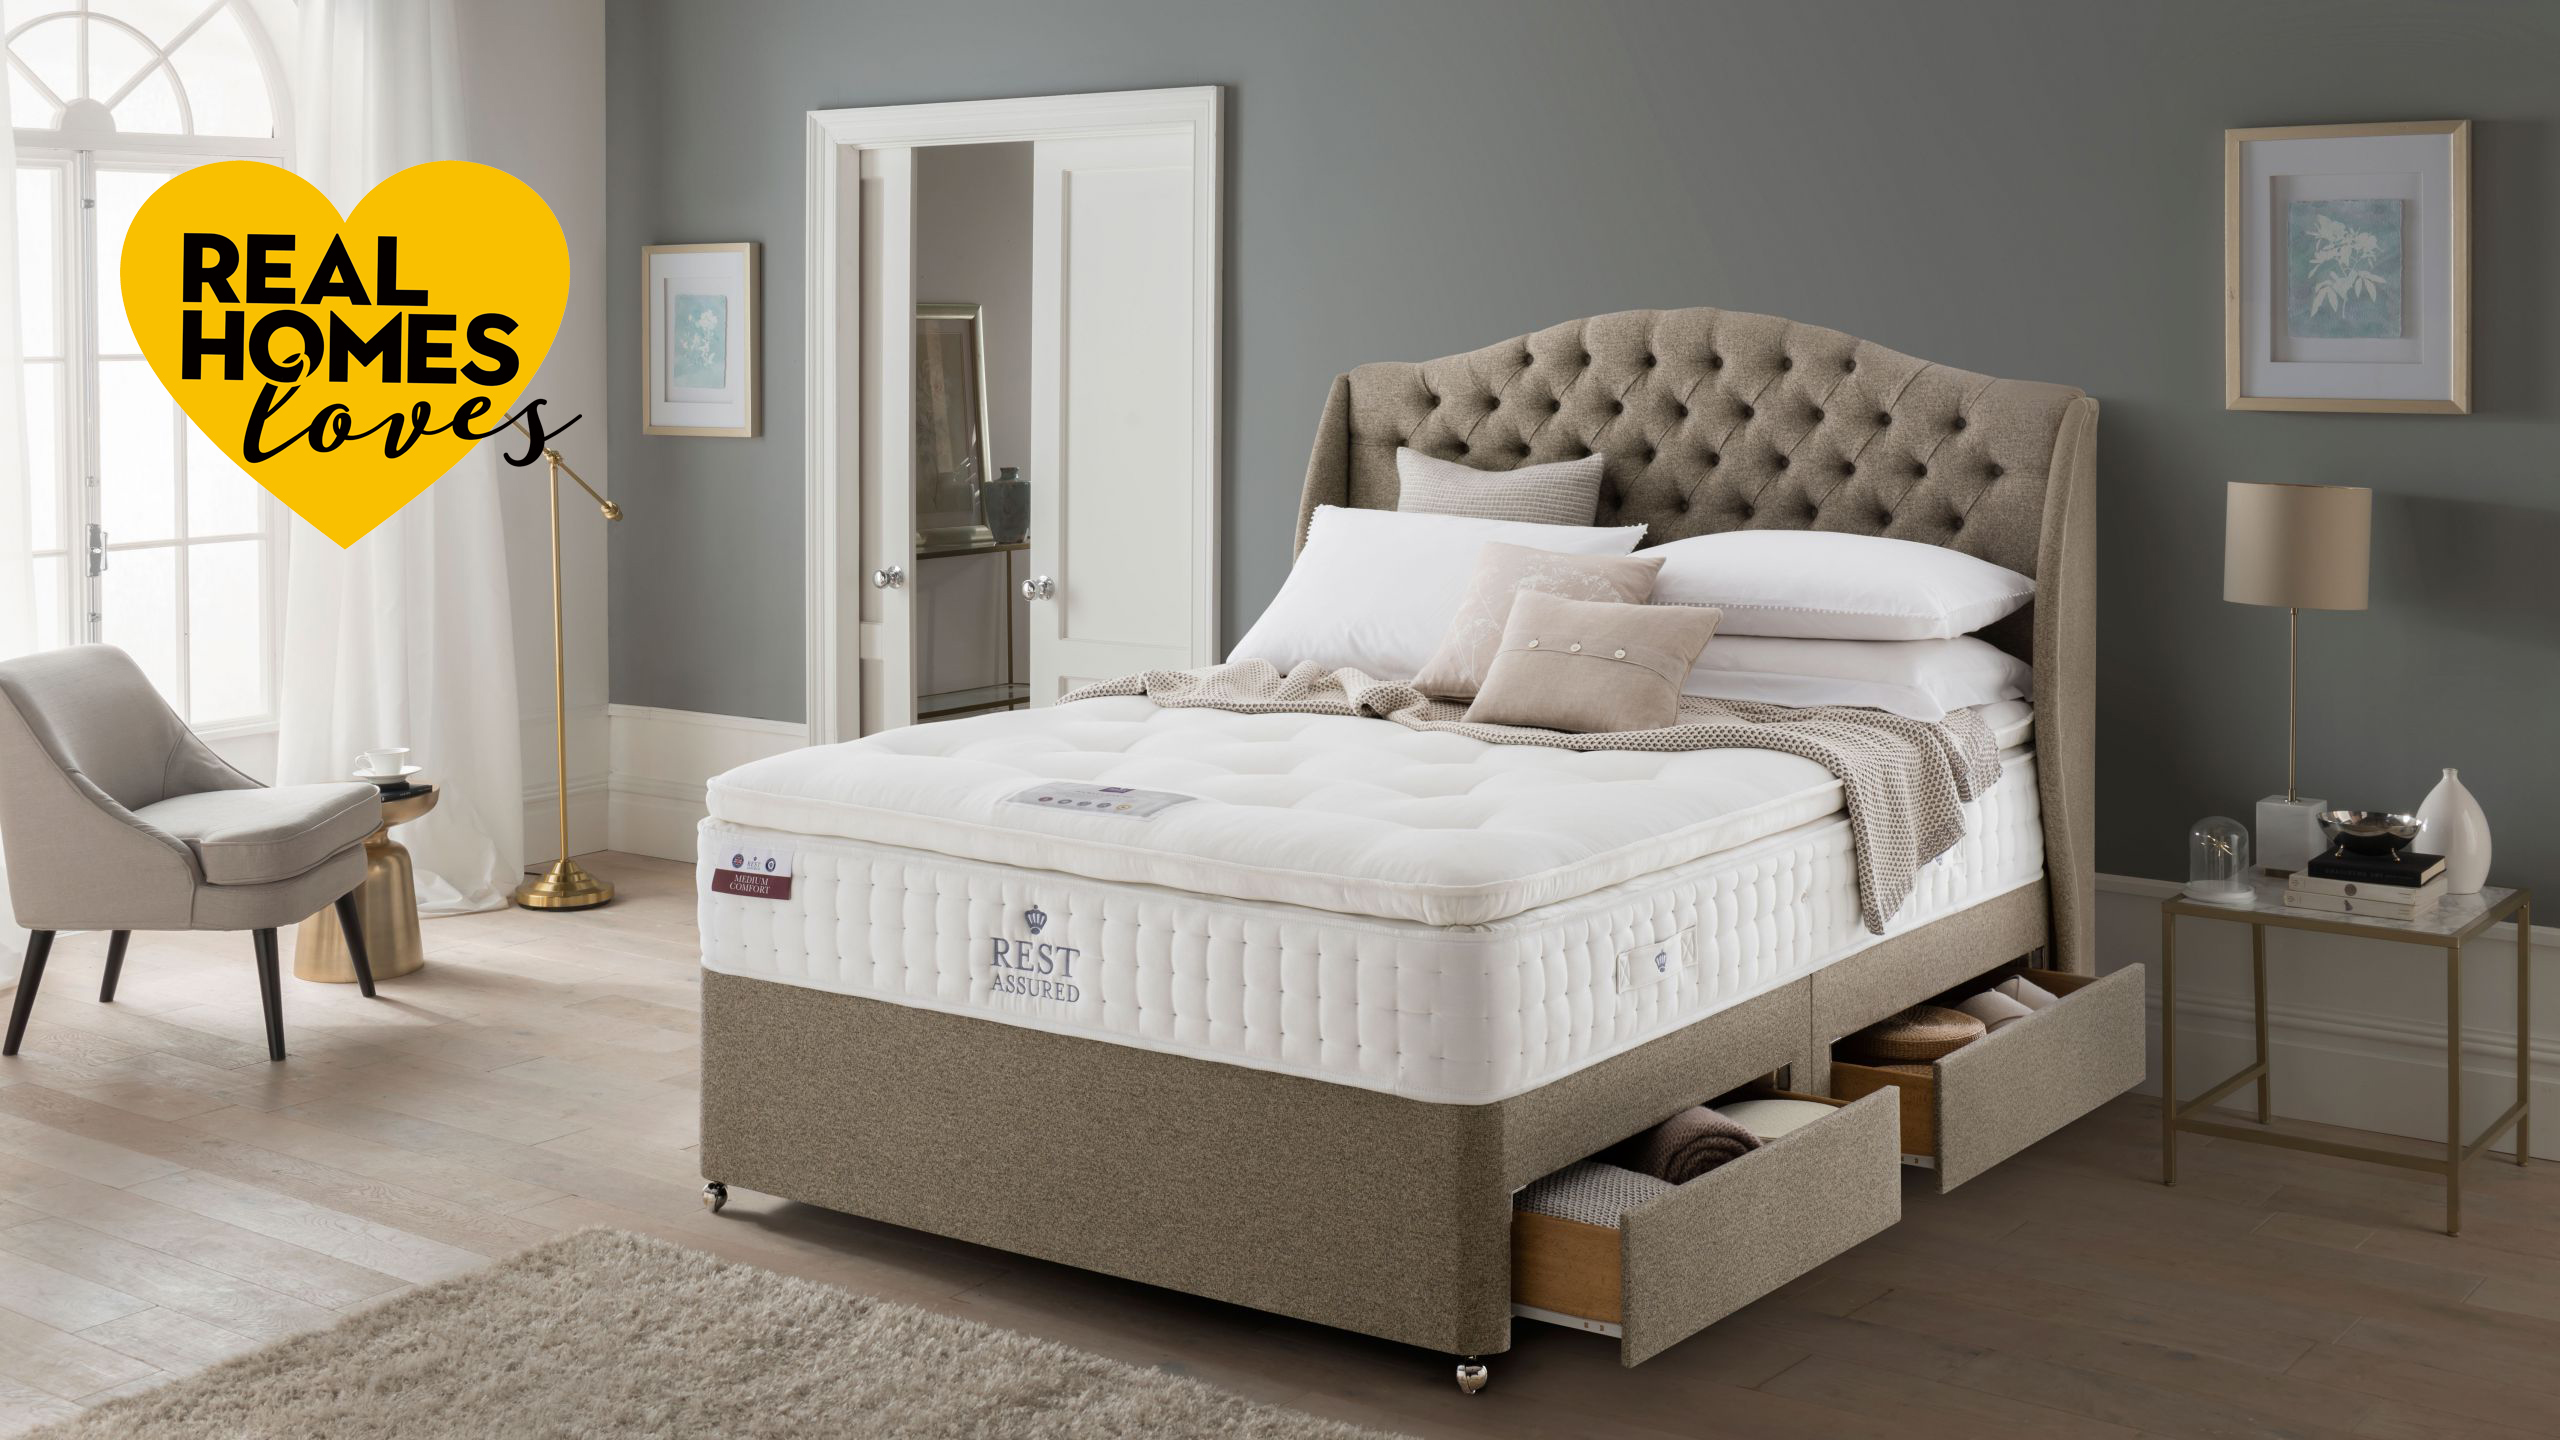 rest assured sherbourne latex mattress